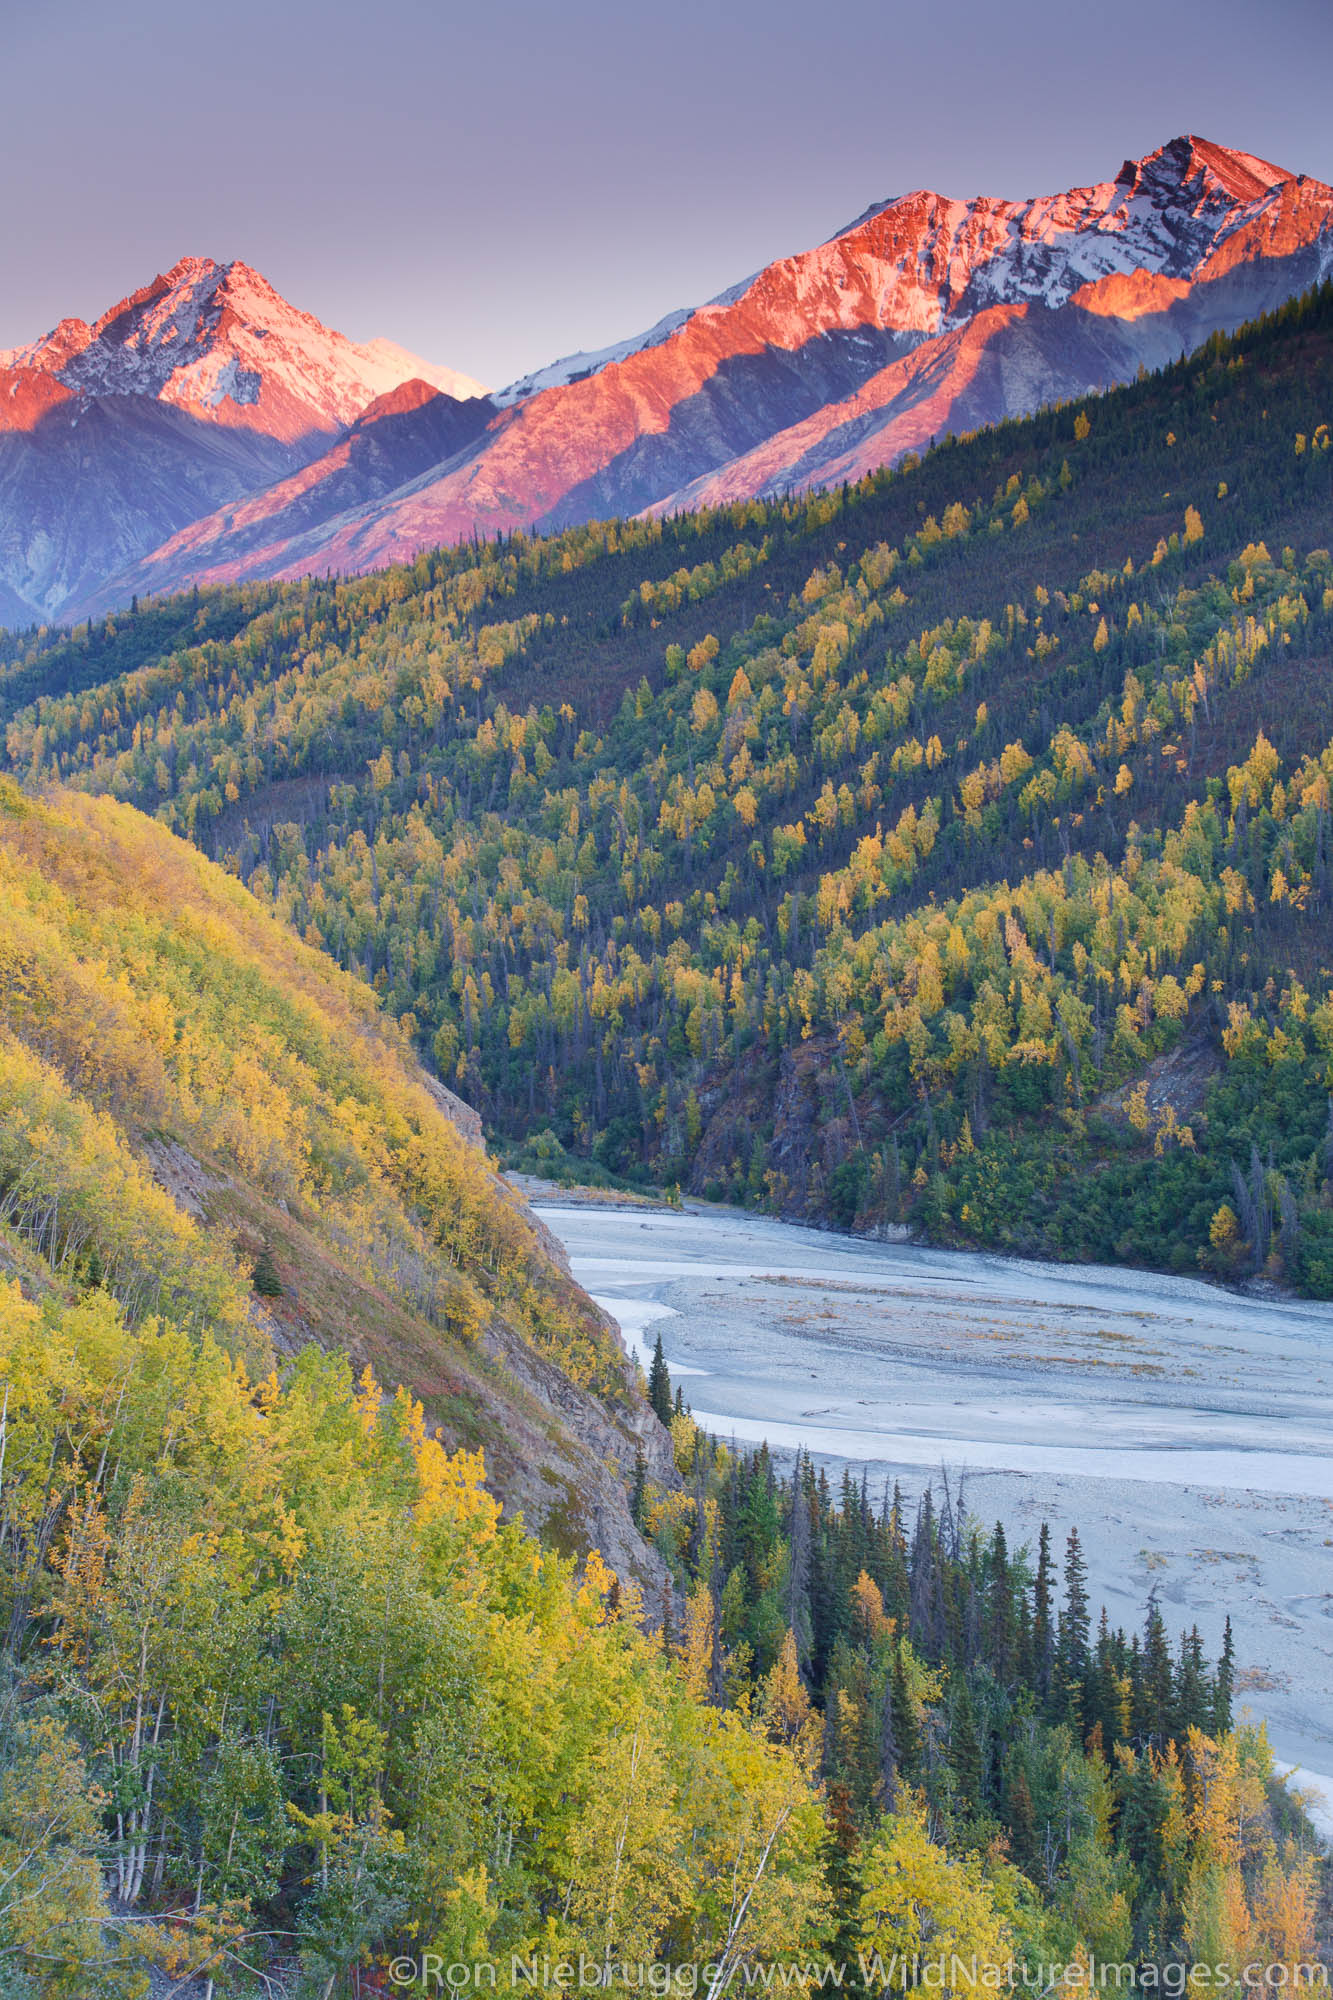 The Matanuska River Valley, Chugach Mountains, Alaska.